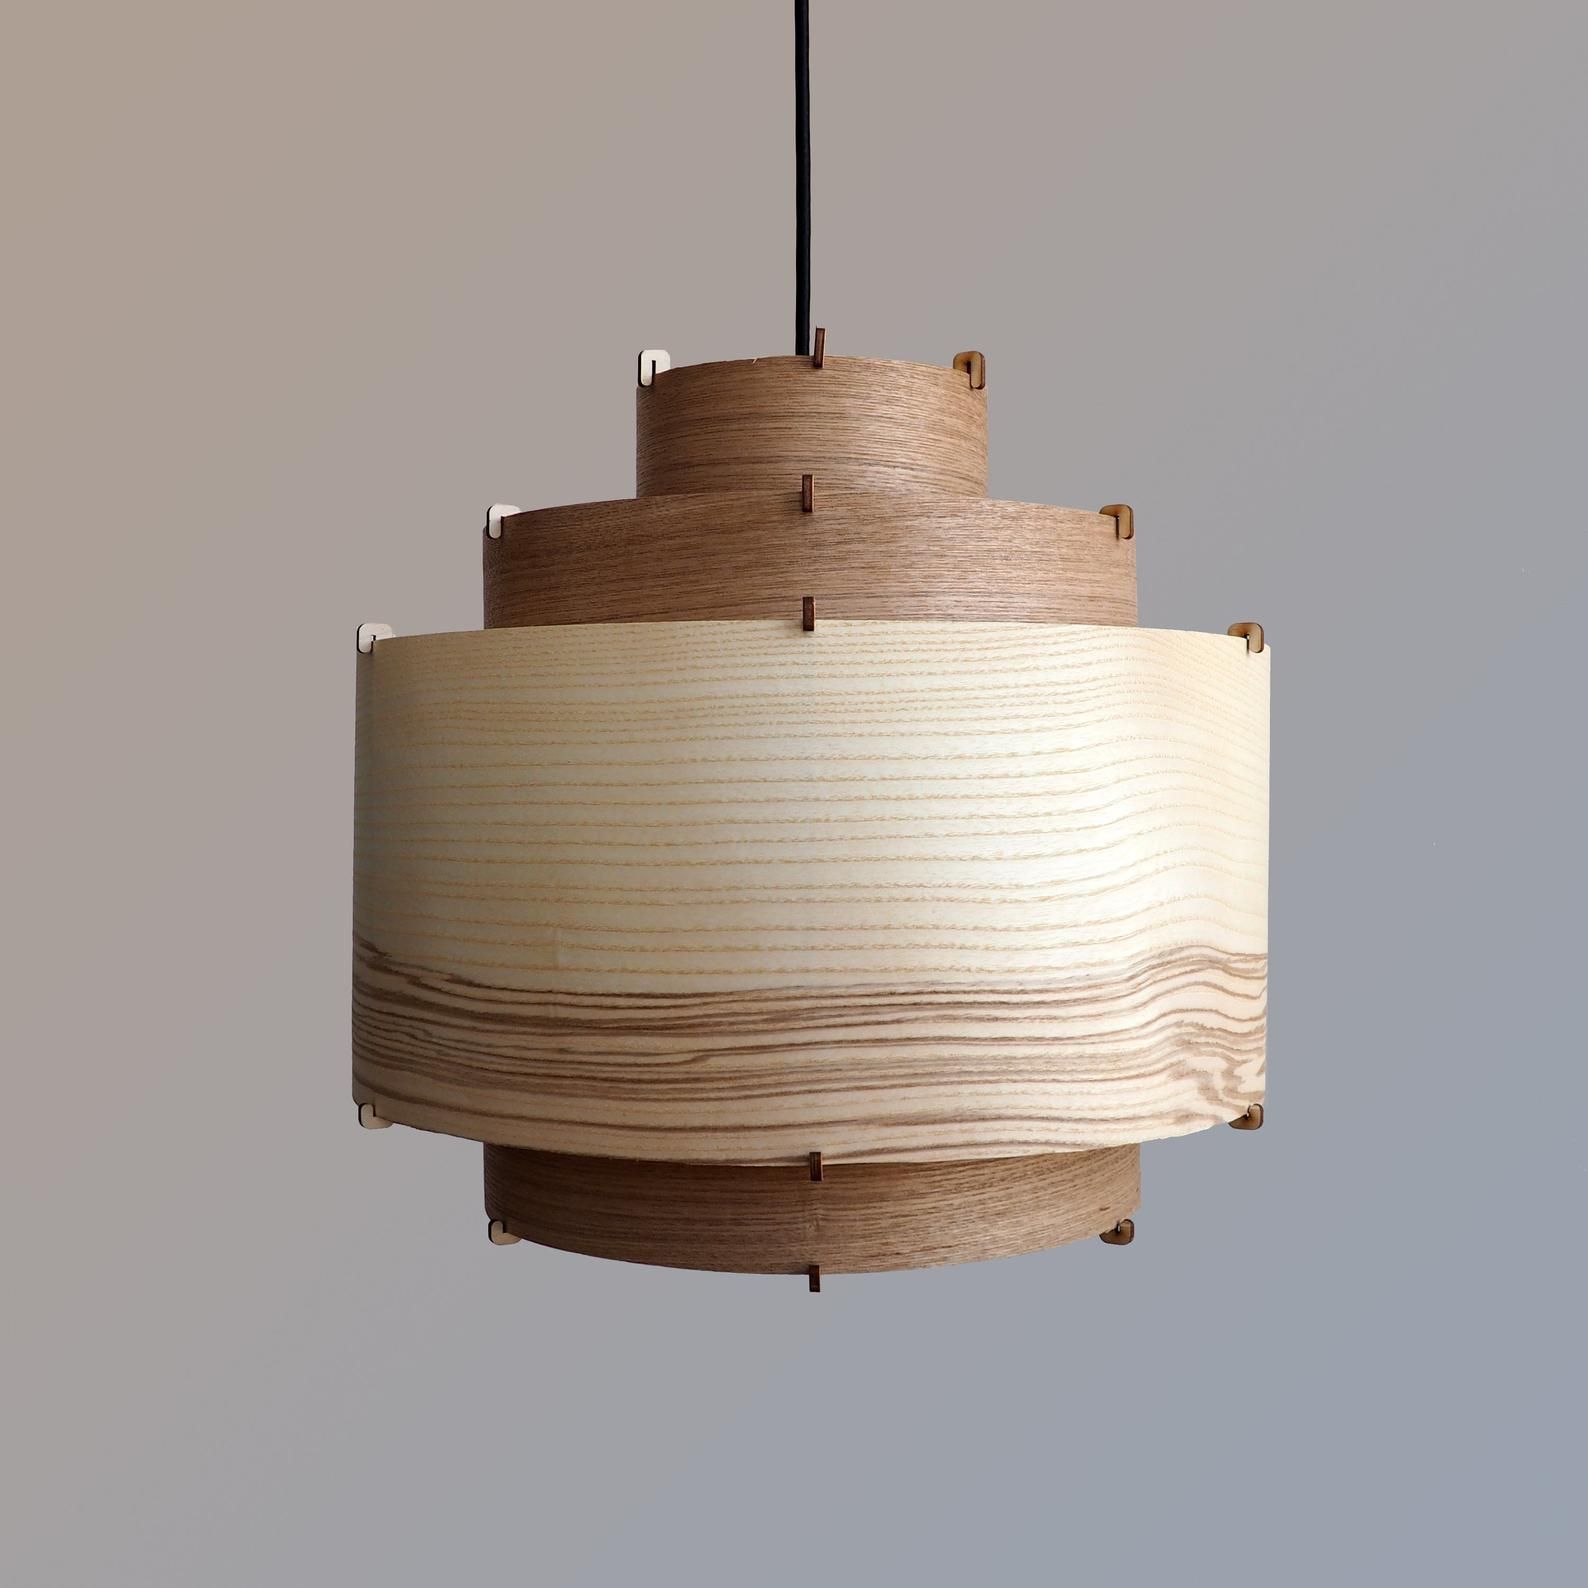 Veneer Lamp / Wood Lamp / Wooden Lamp Shade / Hanging Lamp - Veneer Lamp / Wood Lamp / Wooden Lamp Shade / Hanging Lamp -   19 diy Lamp wood ideas